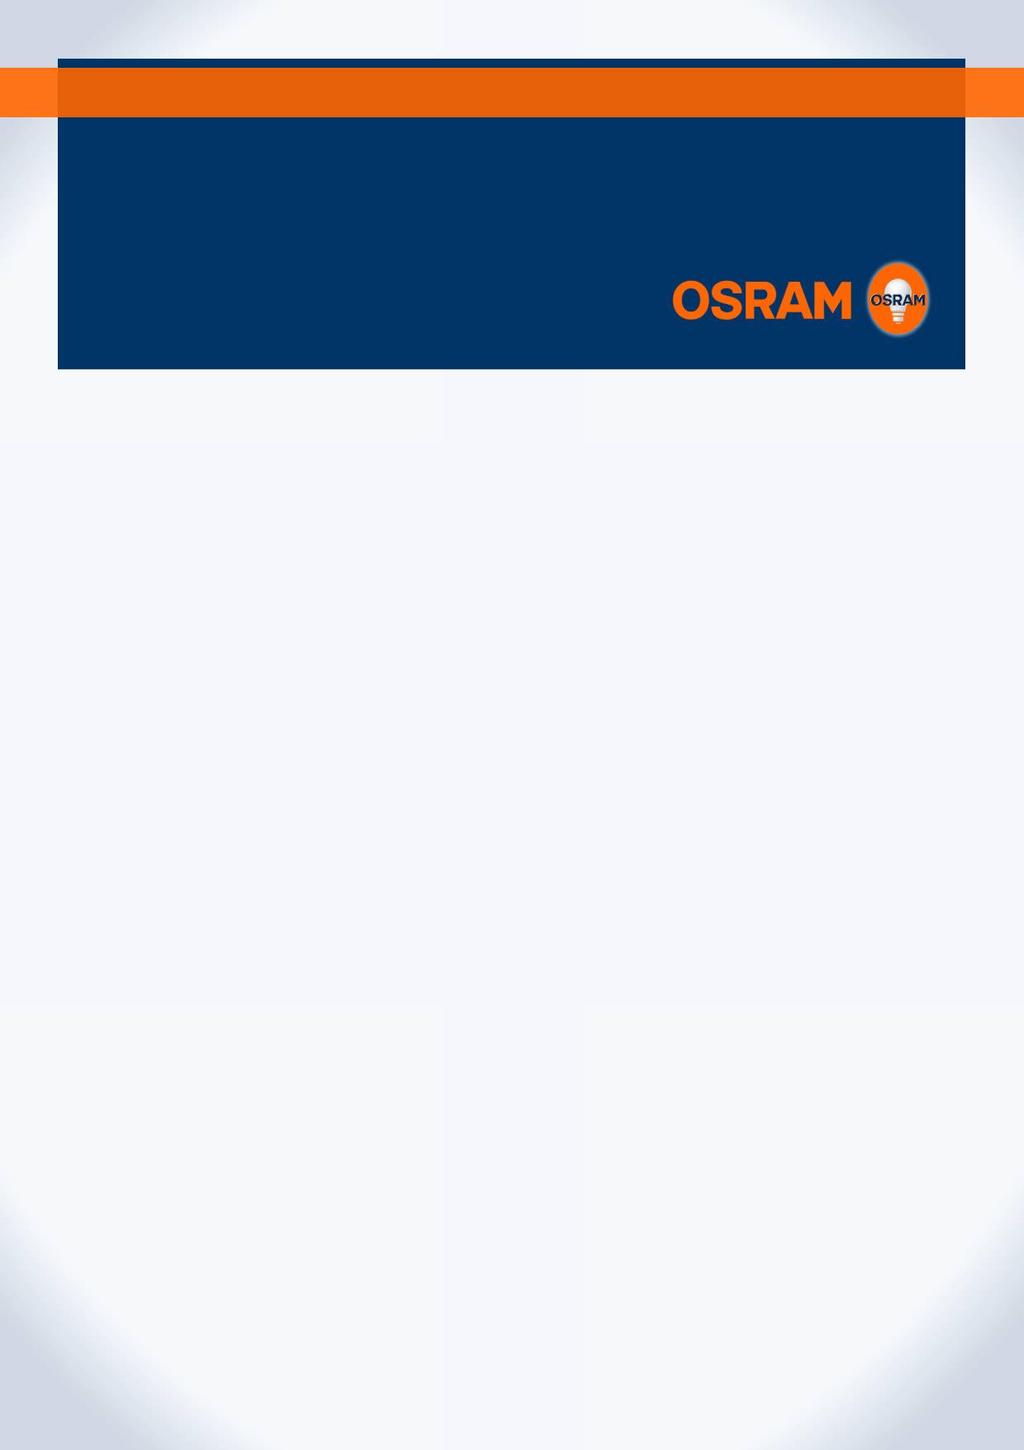 www.osram.